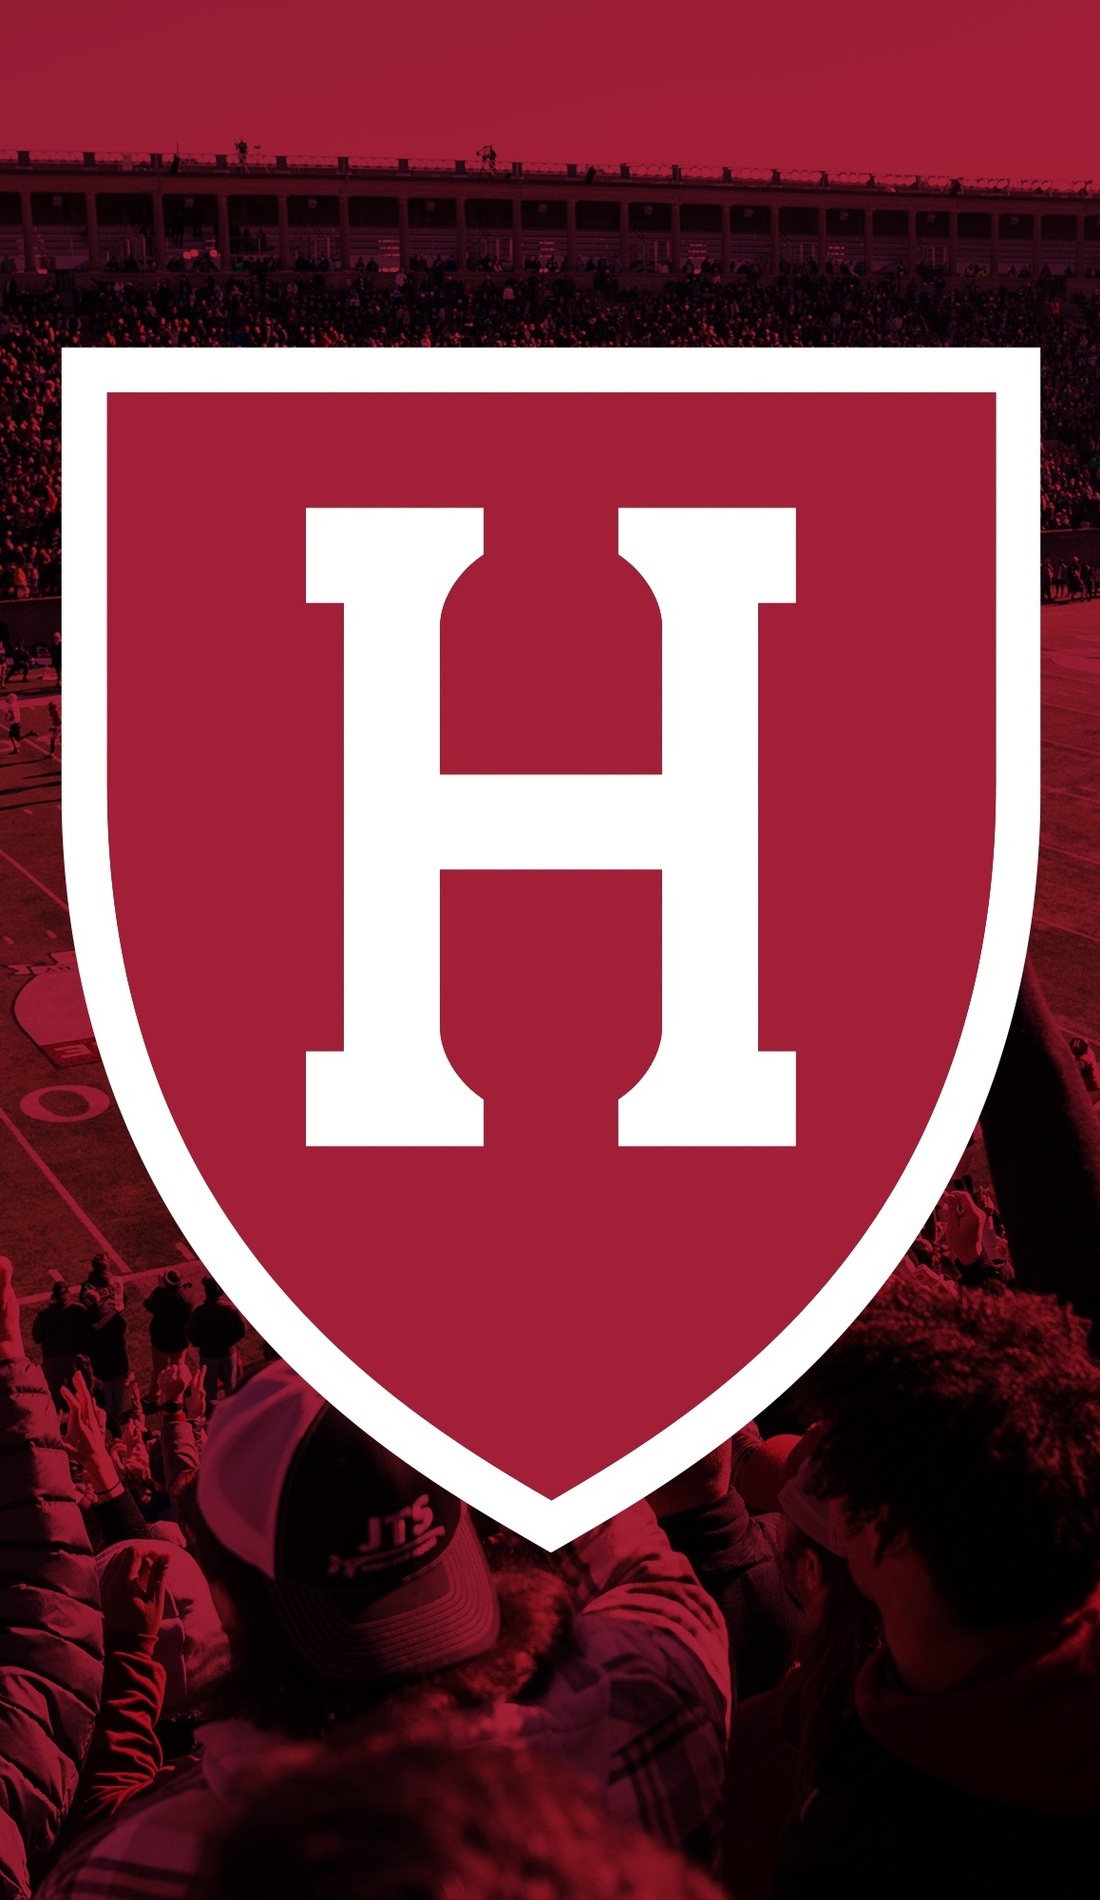 A Harvard Crimson Football live event